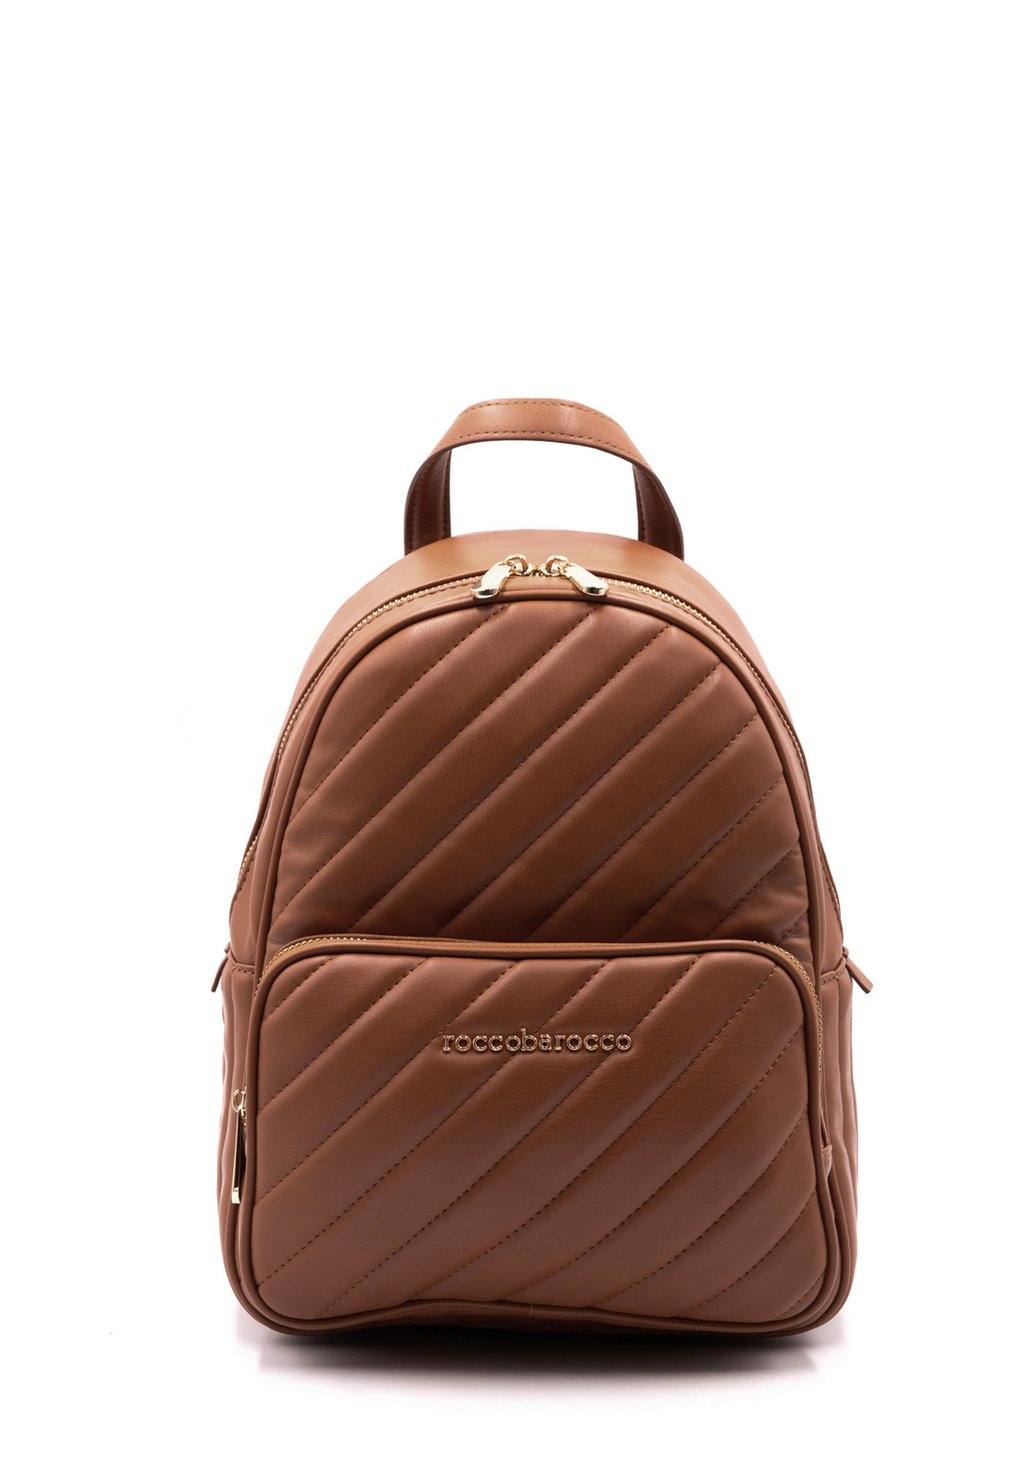 Рюкзак Glam Roccobarocco, коричневый рюкзак roccobarocco rbr910b4702 серо коричневый